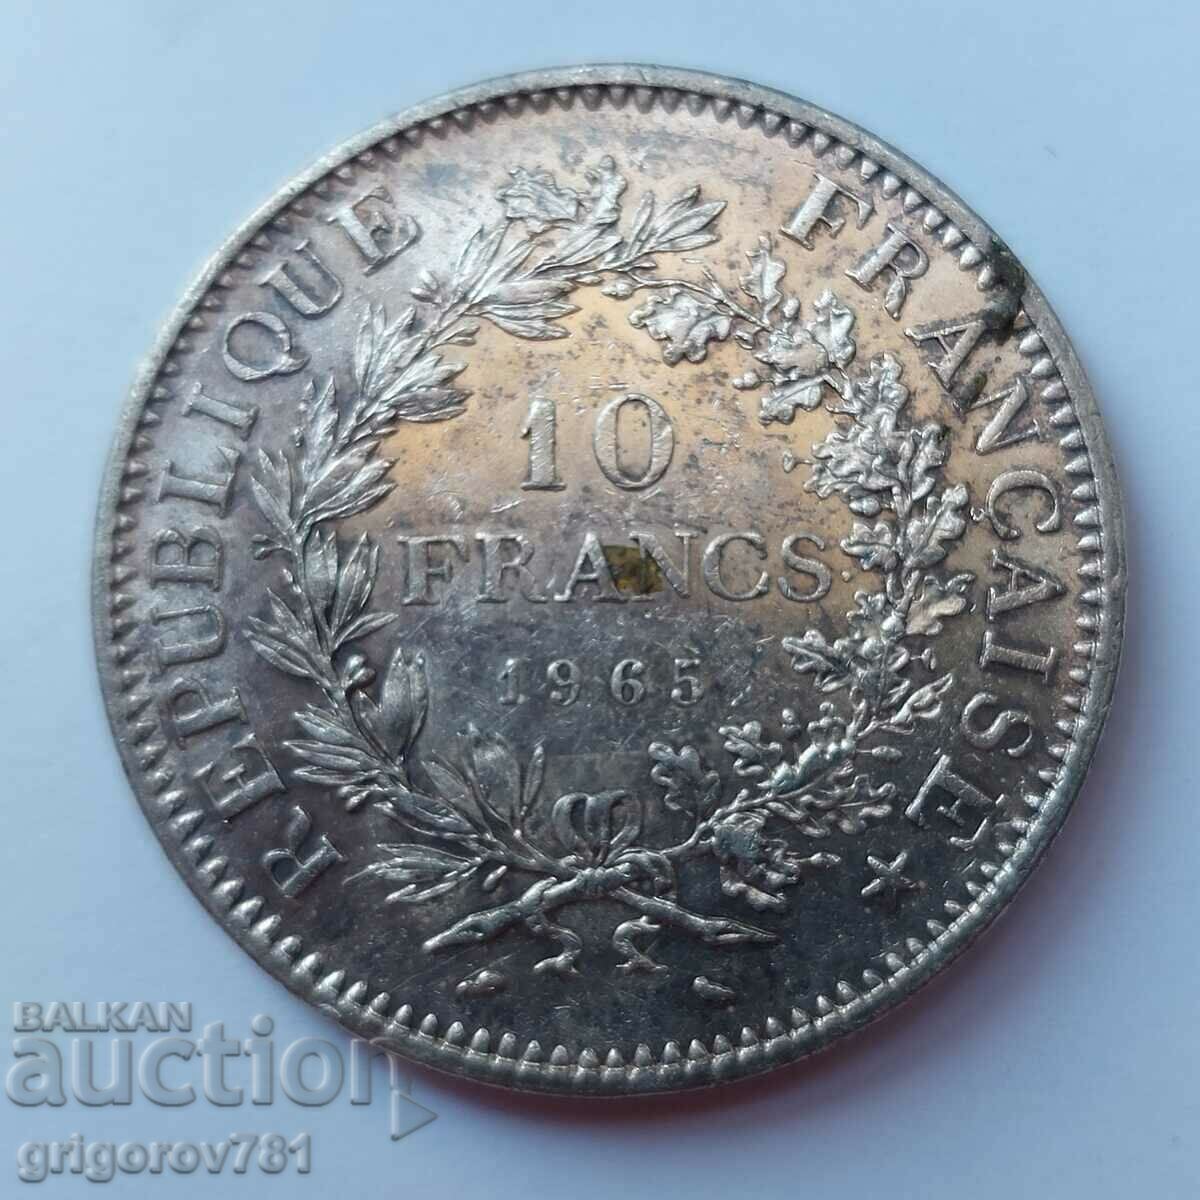 10 franci argint Franța 1965 - monedă de argint # 6